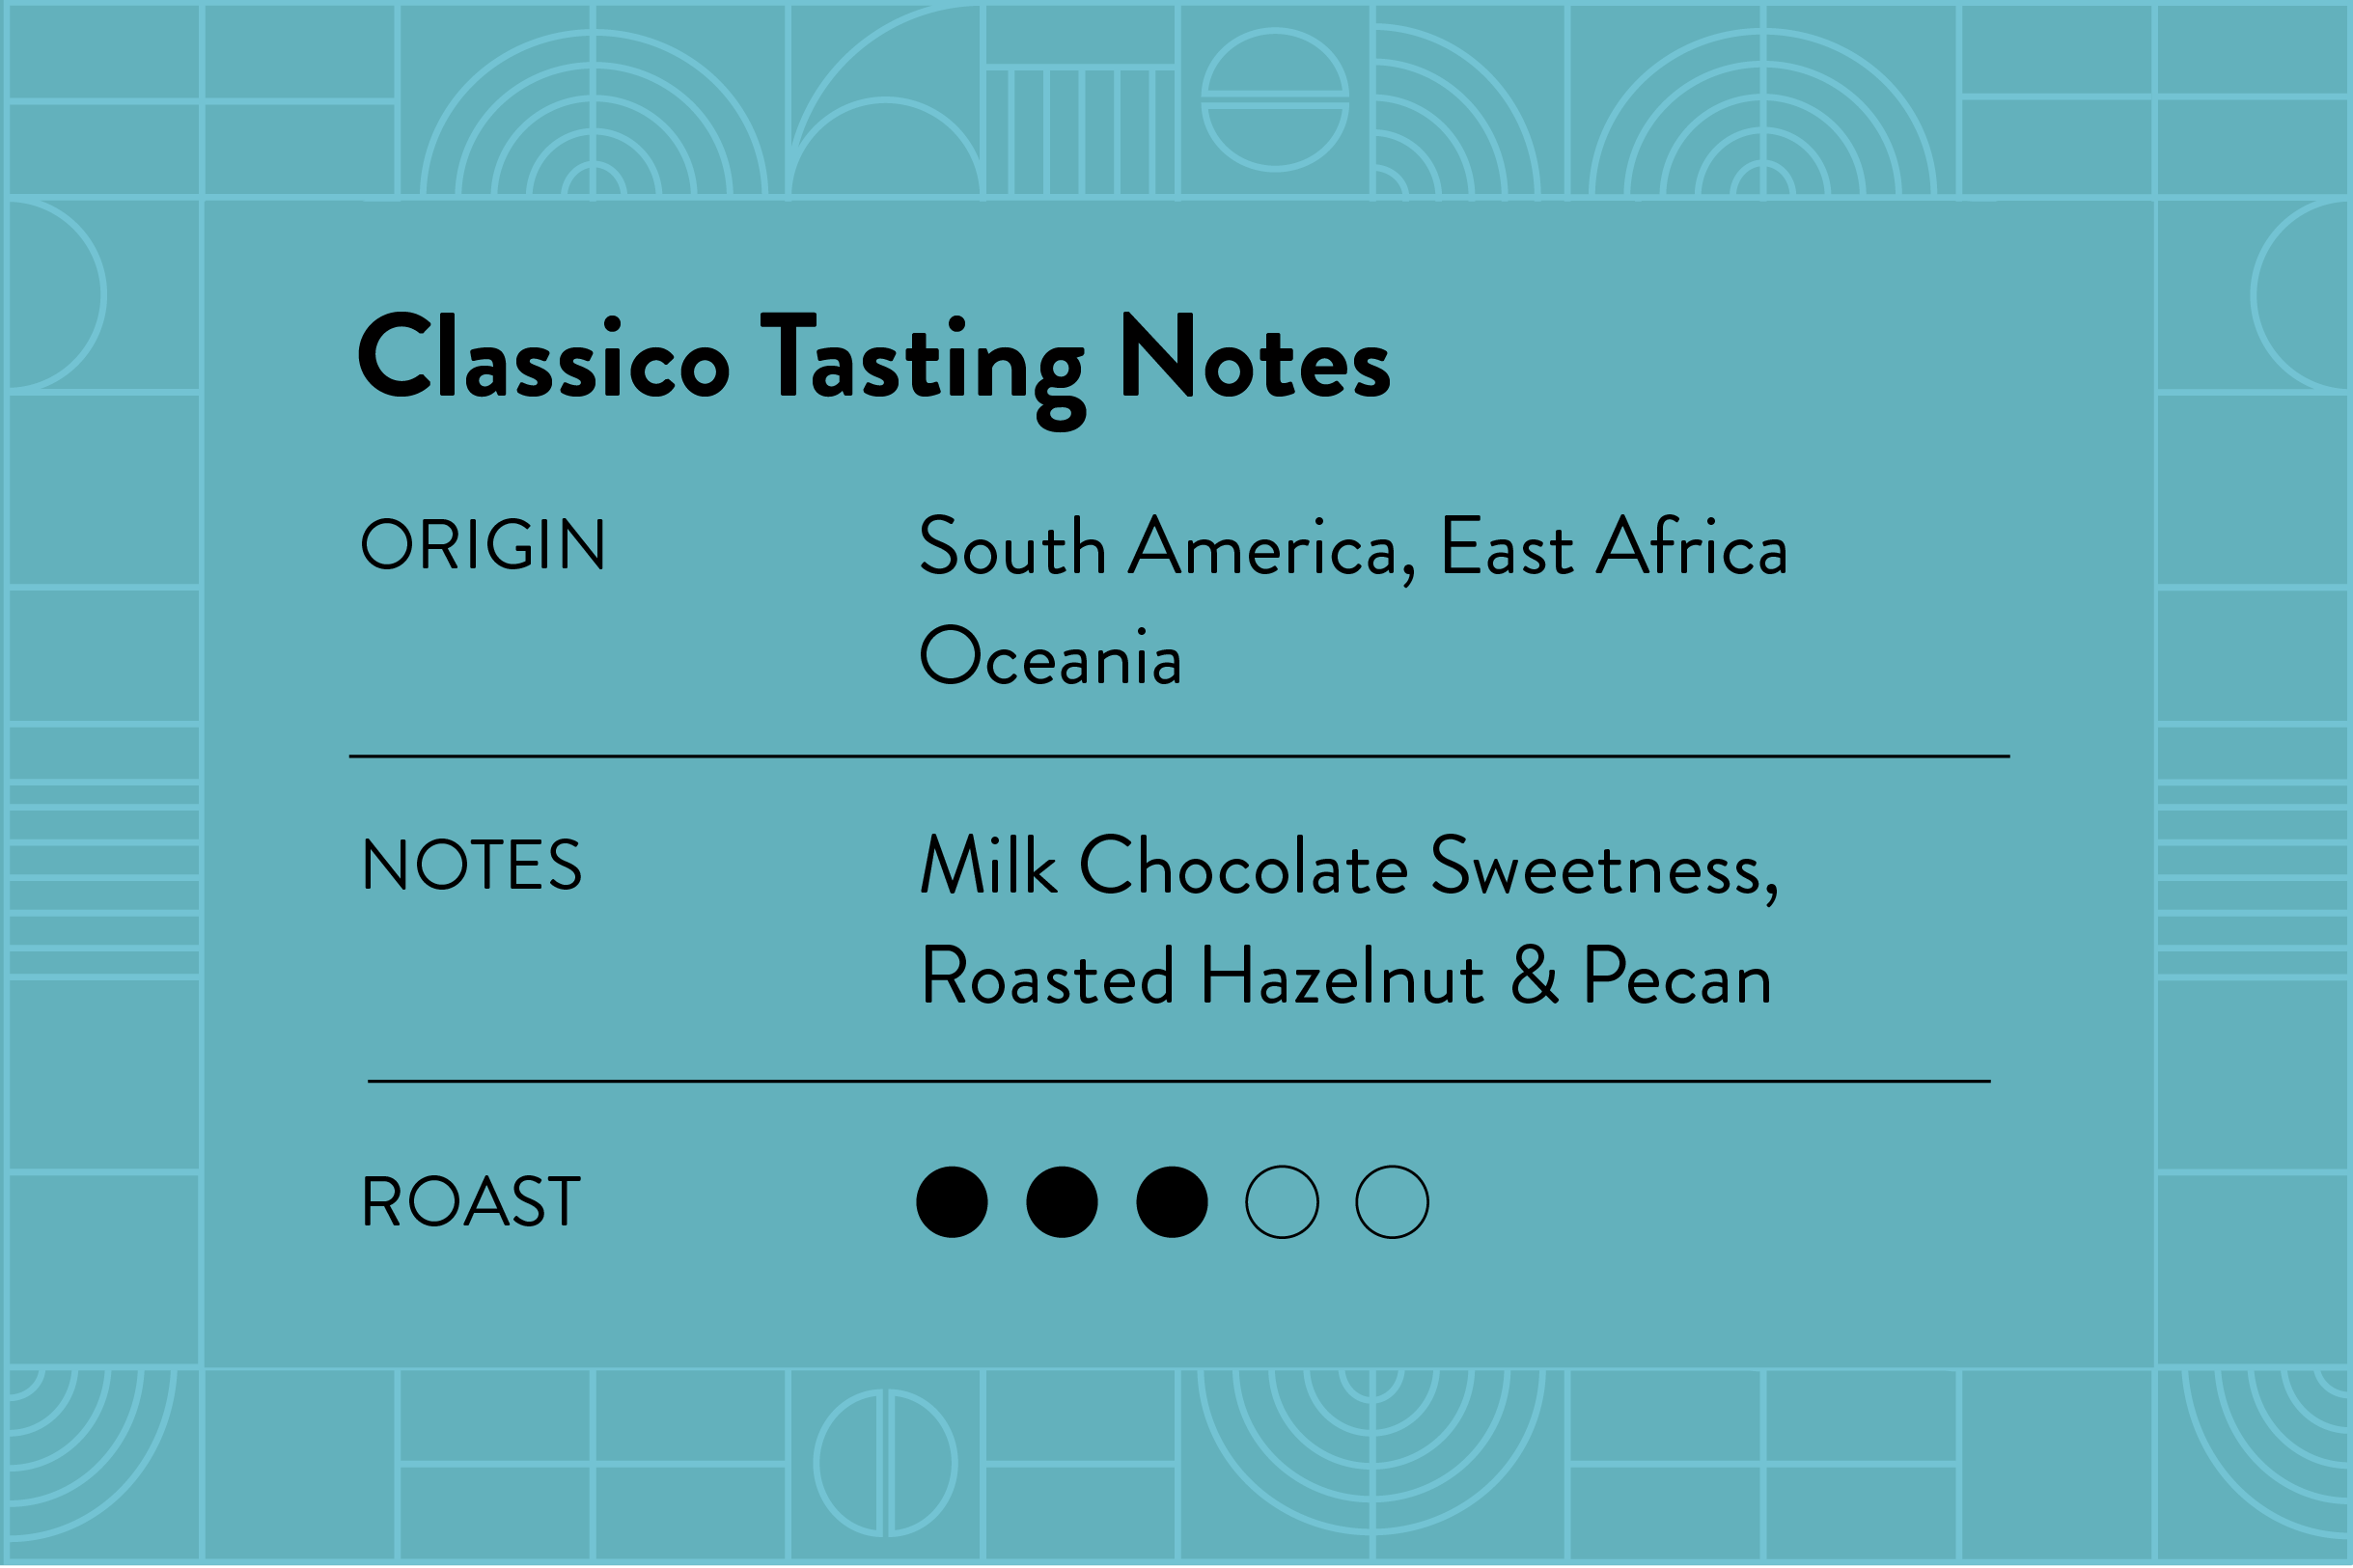 Classico tasting notes, Milk Chocolate sweetness, roasted hazelnut and Pecan